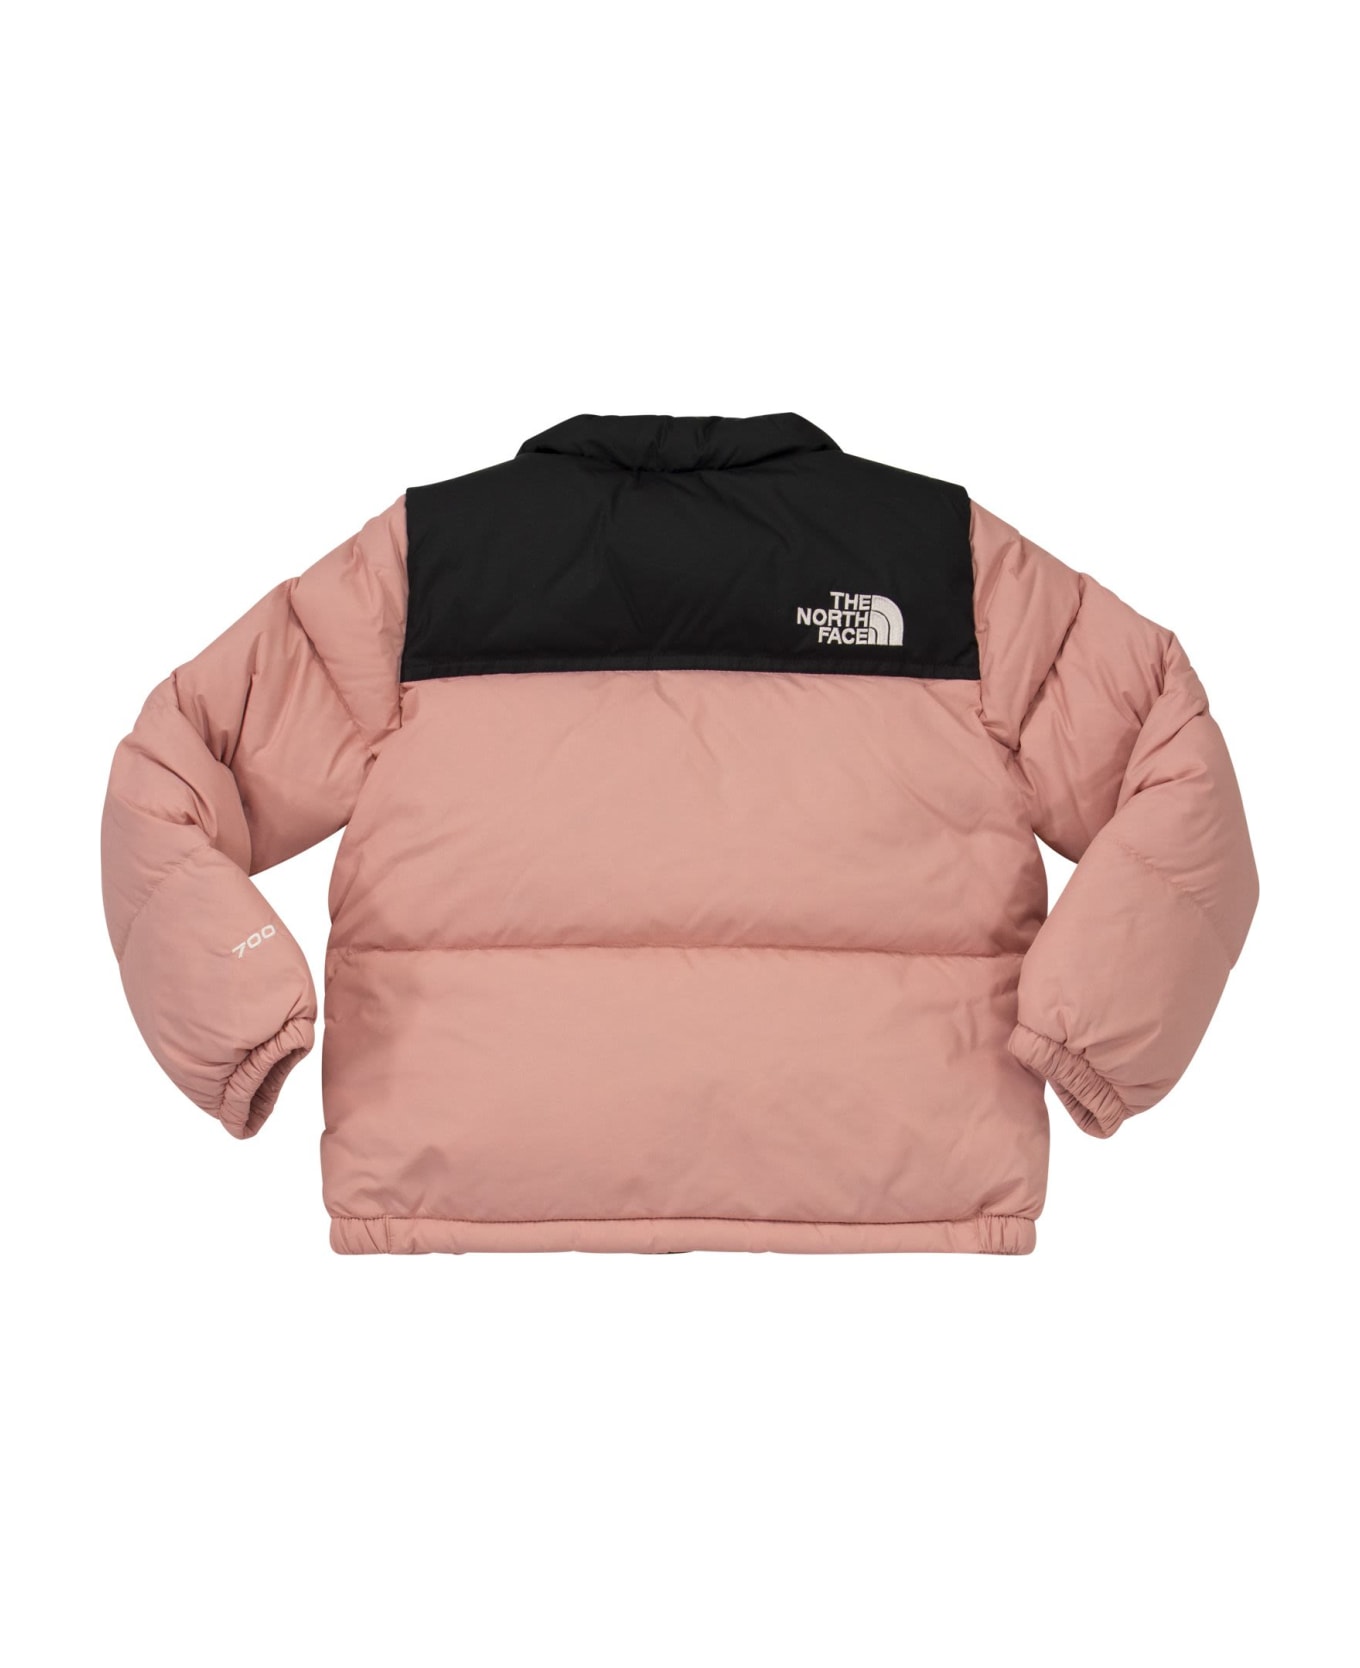 The North Face Retro Nuptse - Short Down Jacket - Pink/black